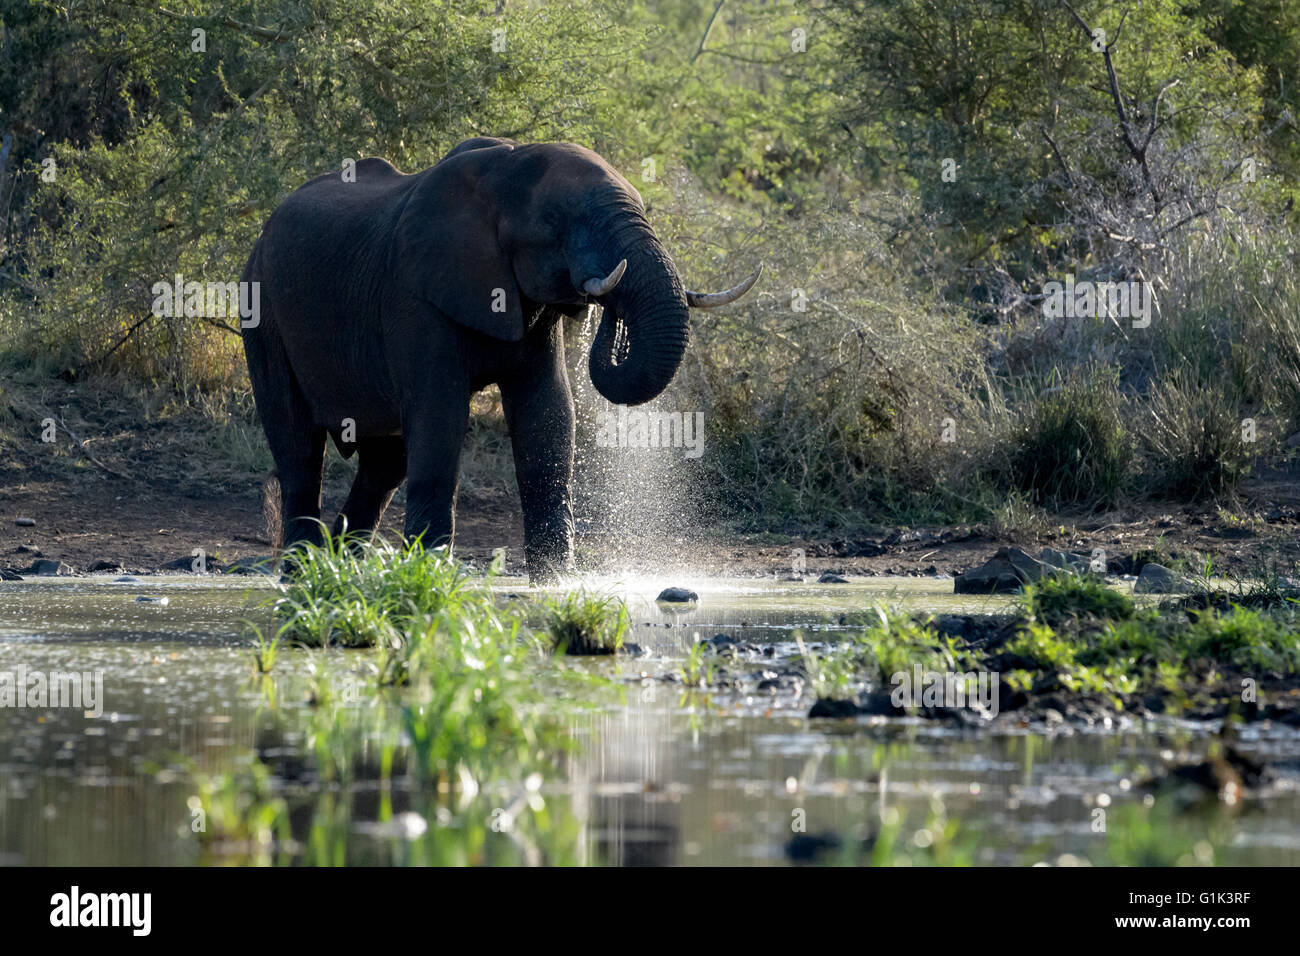 Elefante africano (loxodonta africana), el agua potable, retroiluminado, el parque nacional Kruger, Sudáfrica Foto de stock